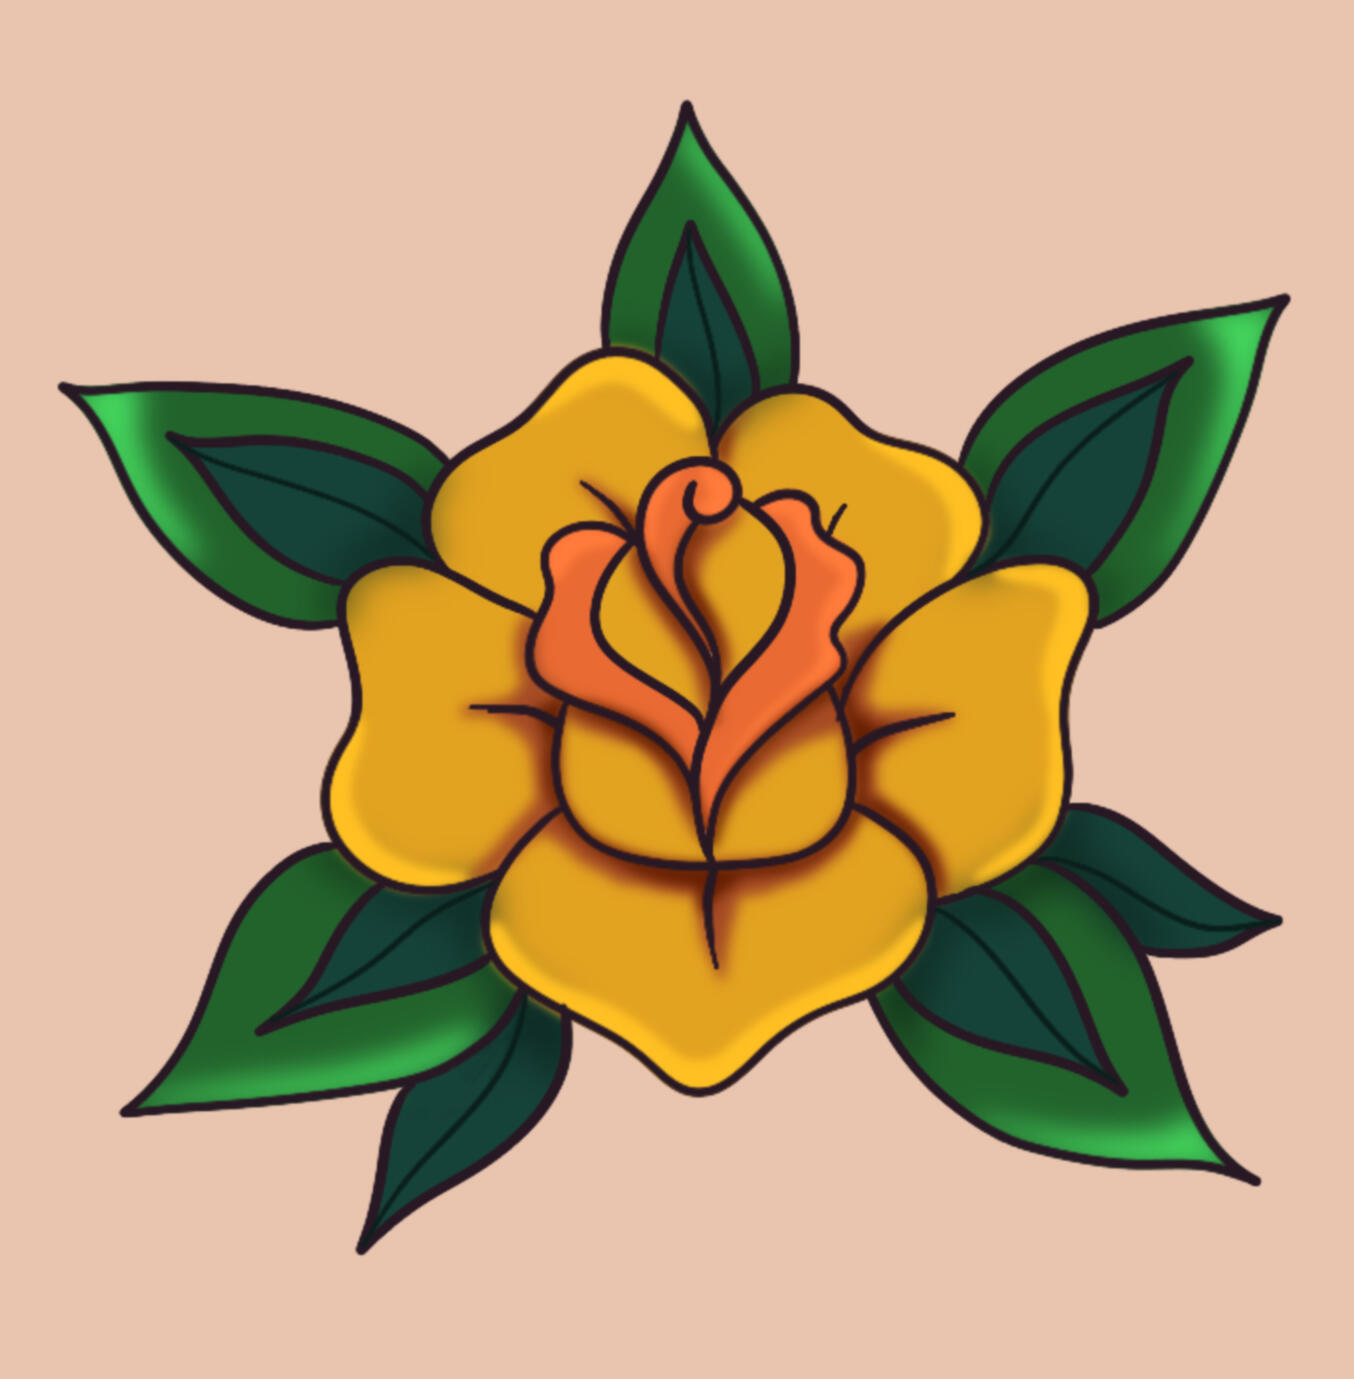 Tattoo style yellow rose